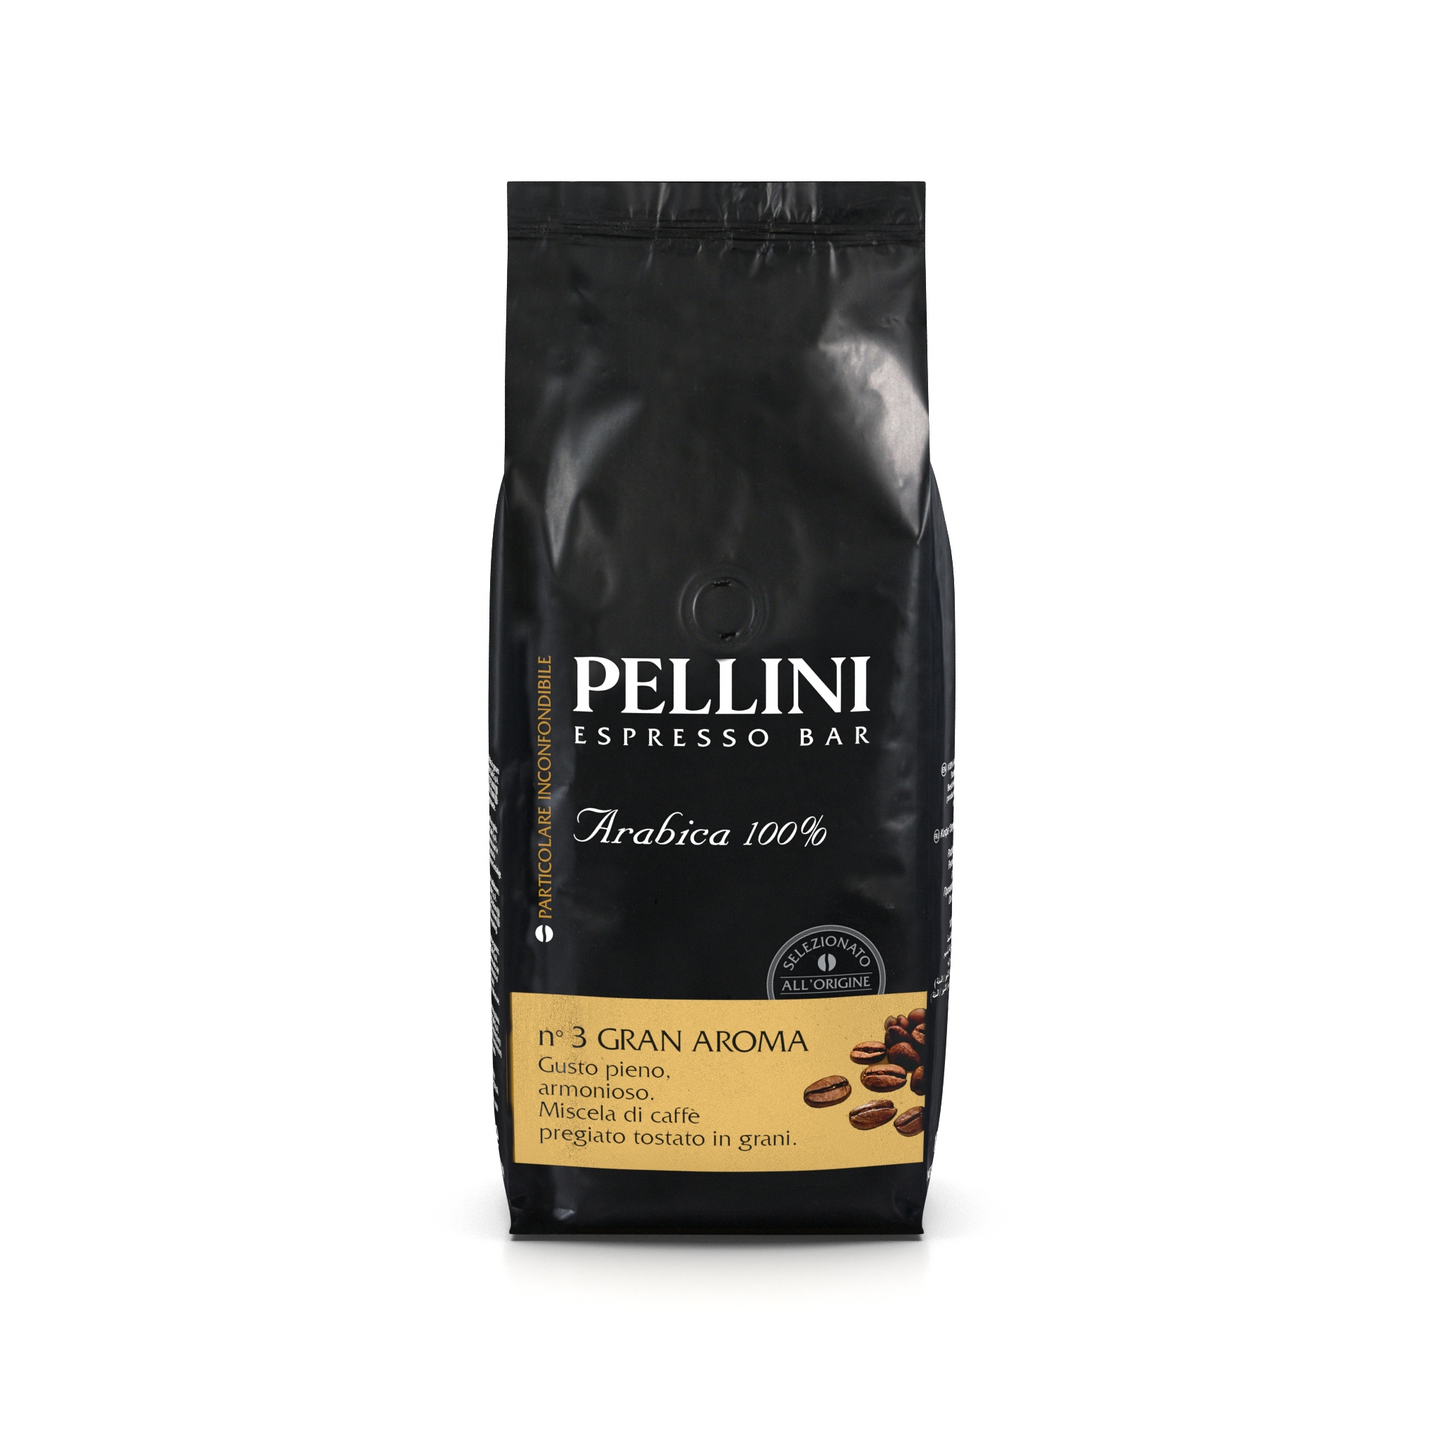 Pellini Gran Aroma Nro3 kahvipapu 1 kg